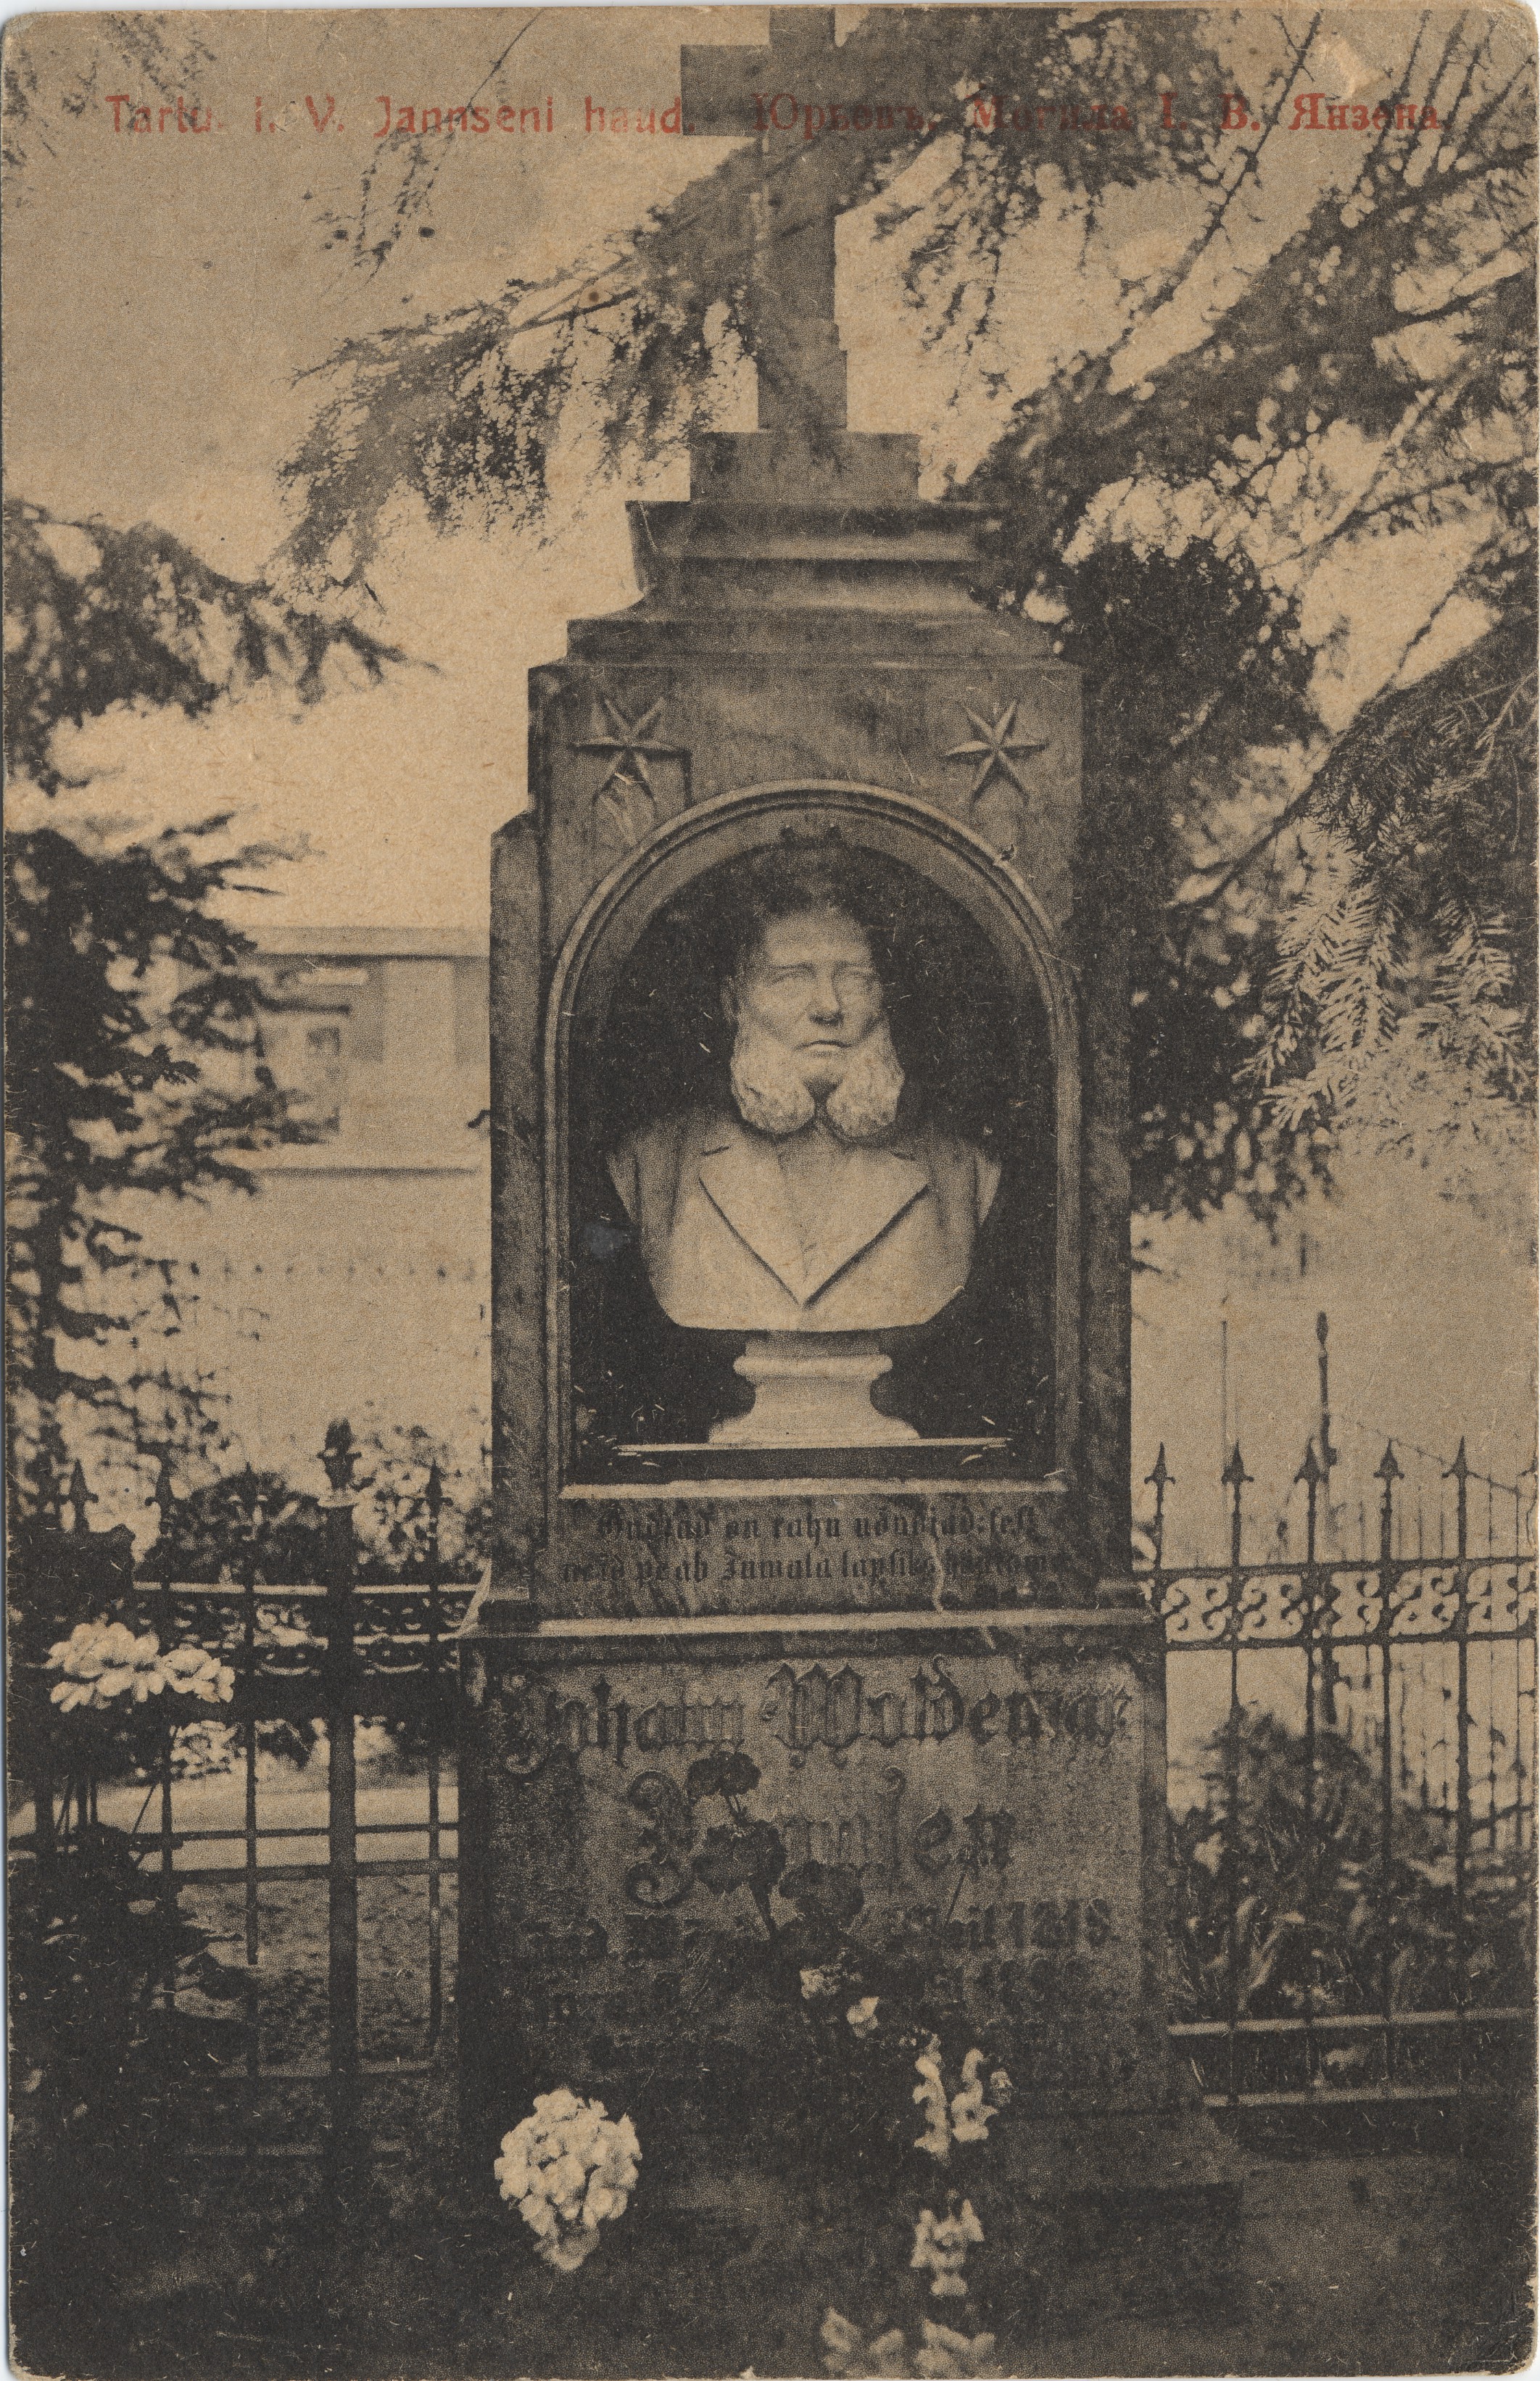 Tartu : I. V. Janseni grave = Jurjevъ : grave I. V. Jansen